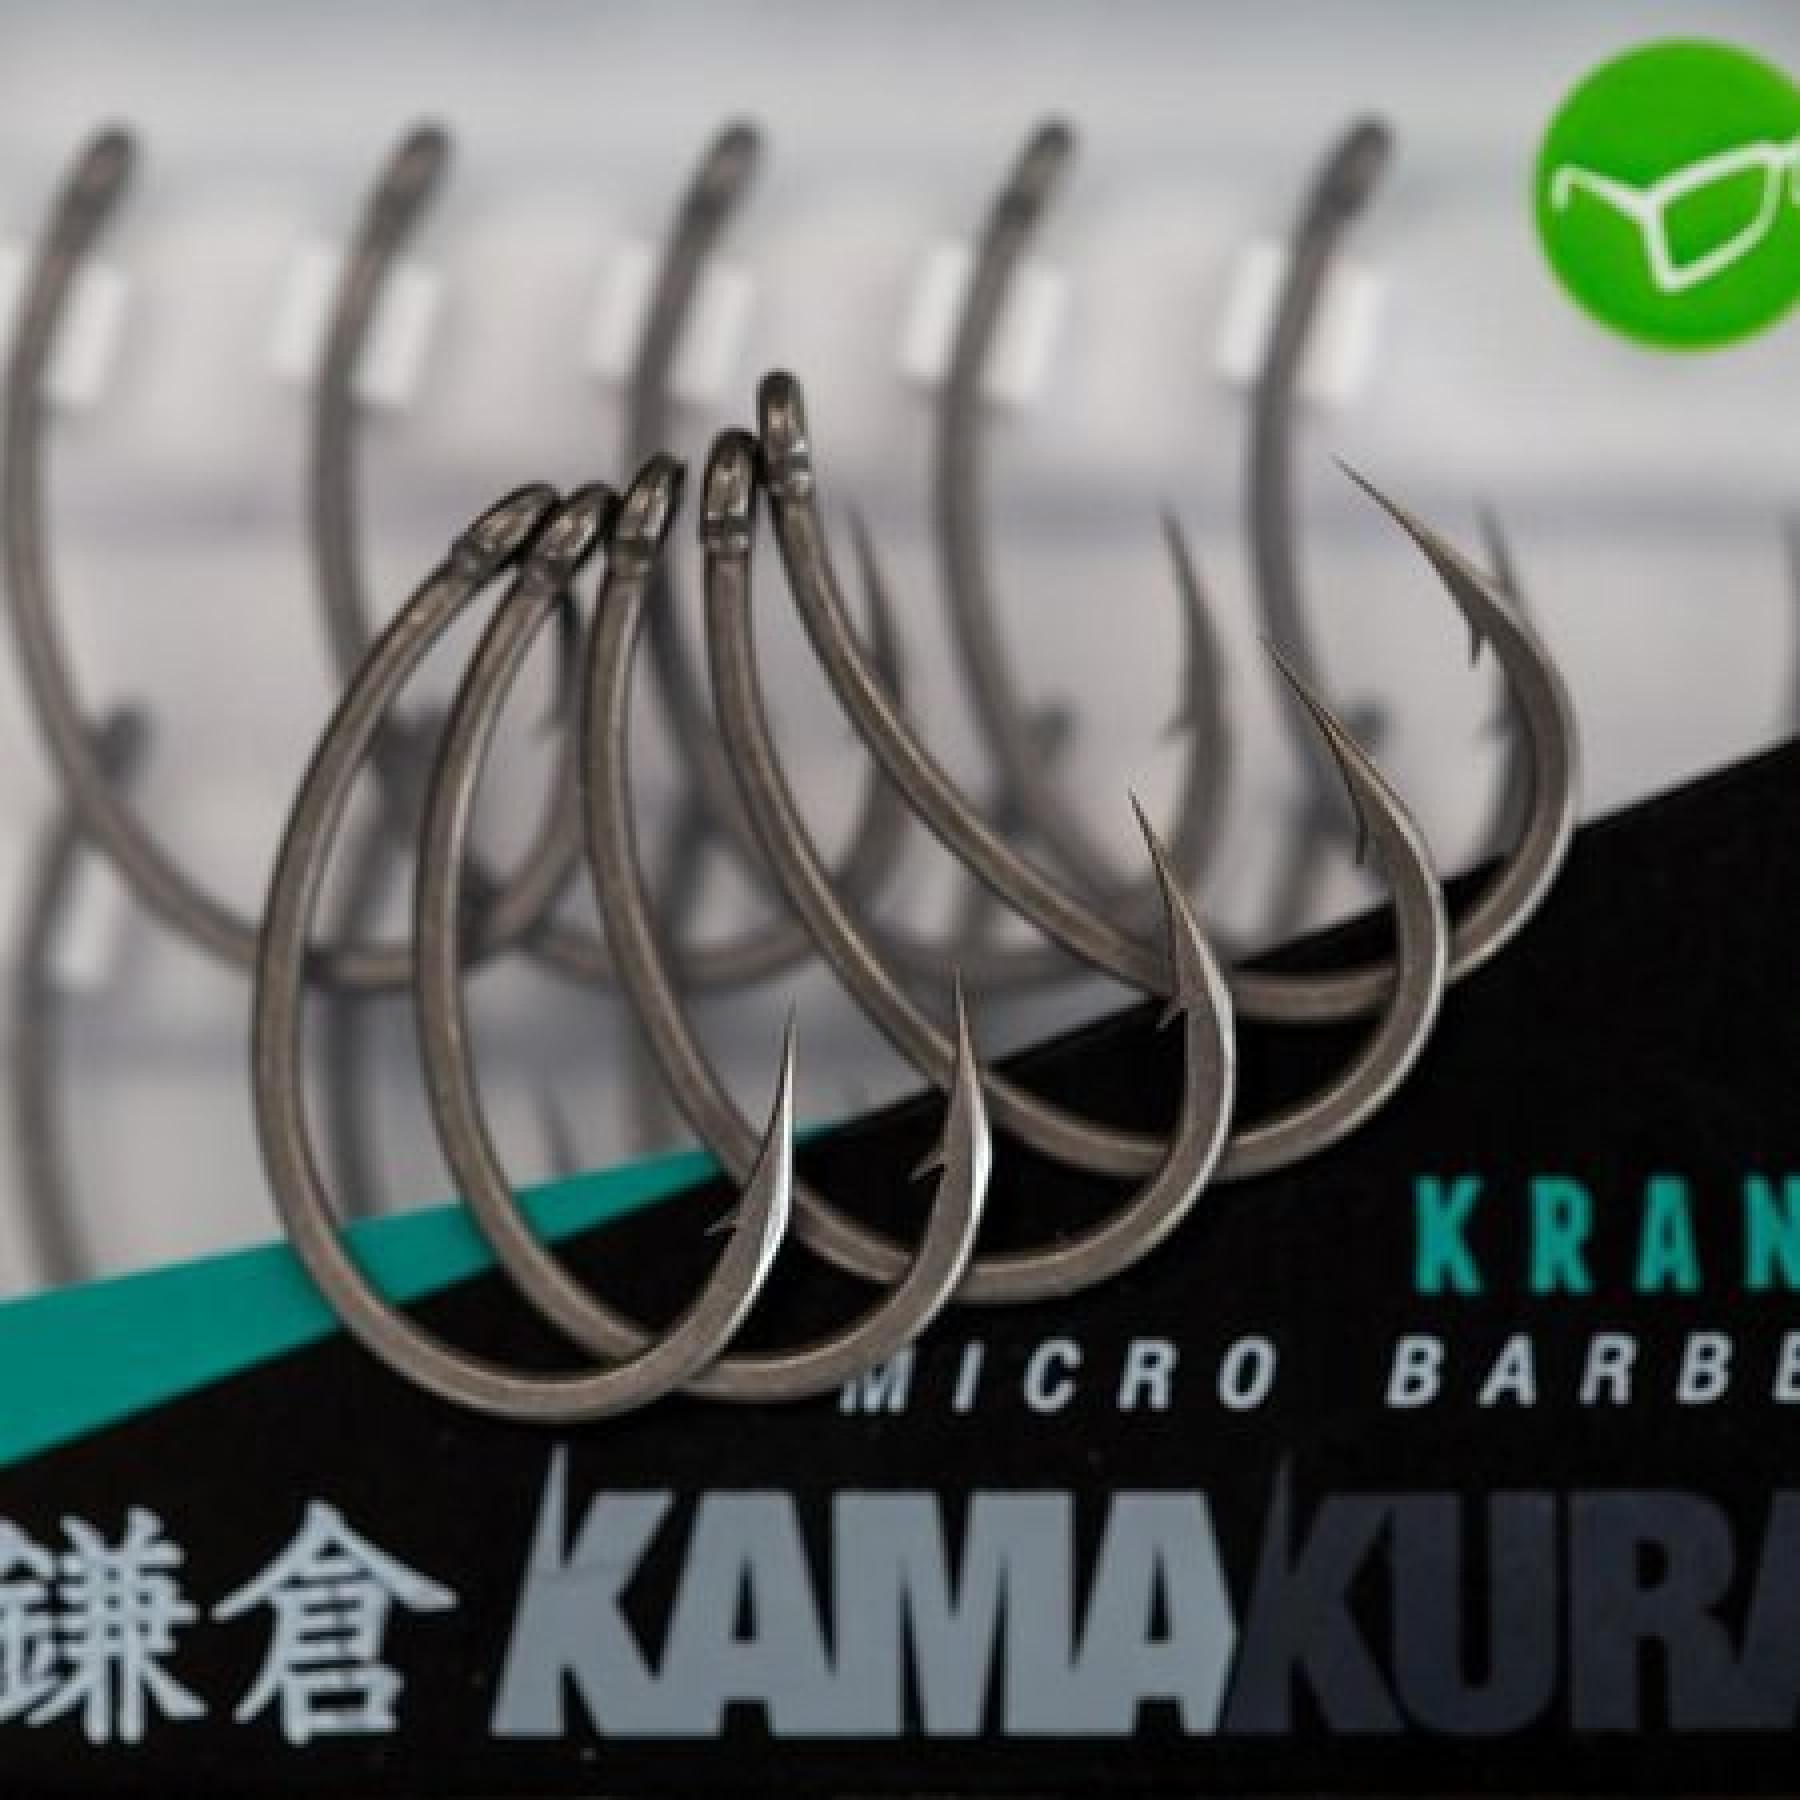 Hook korda Kamakura Krank S8